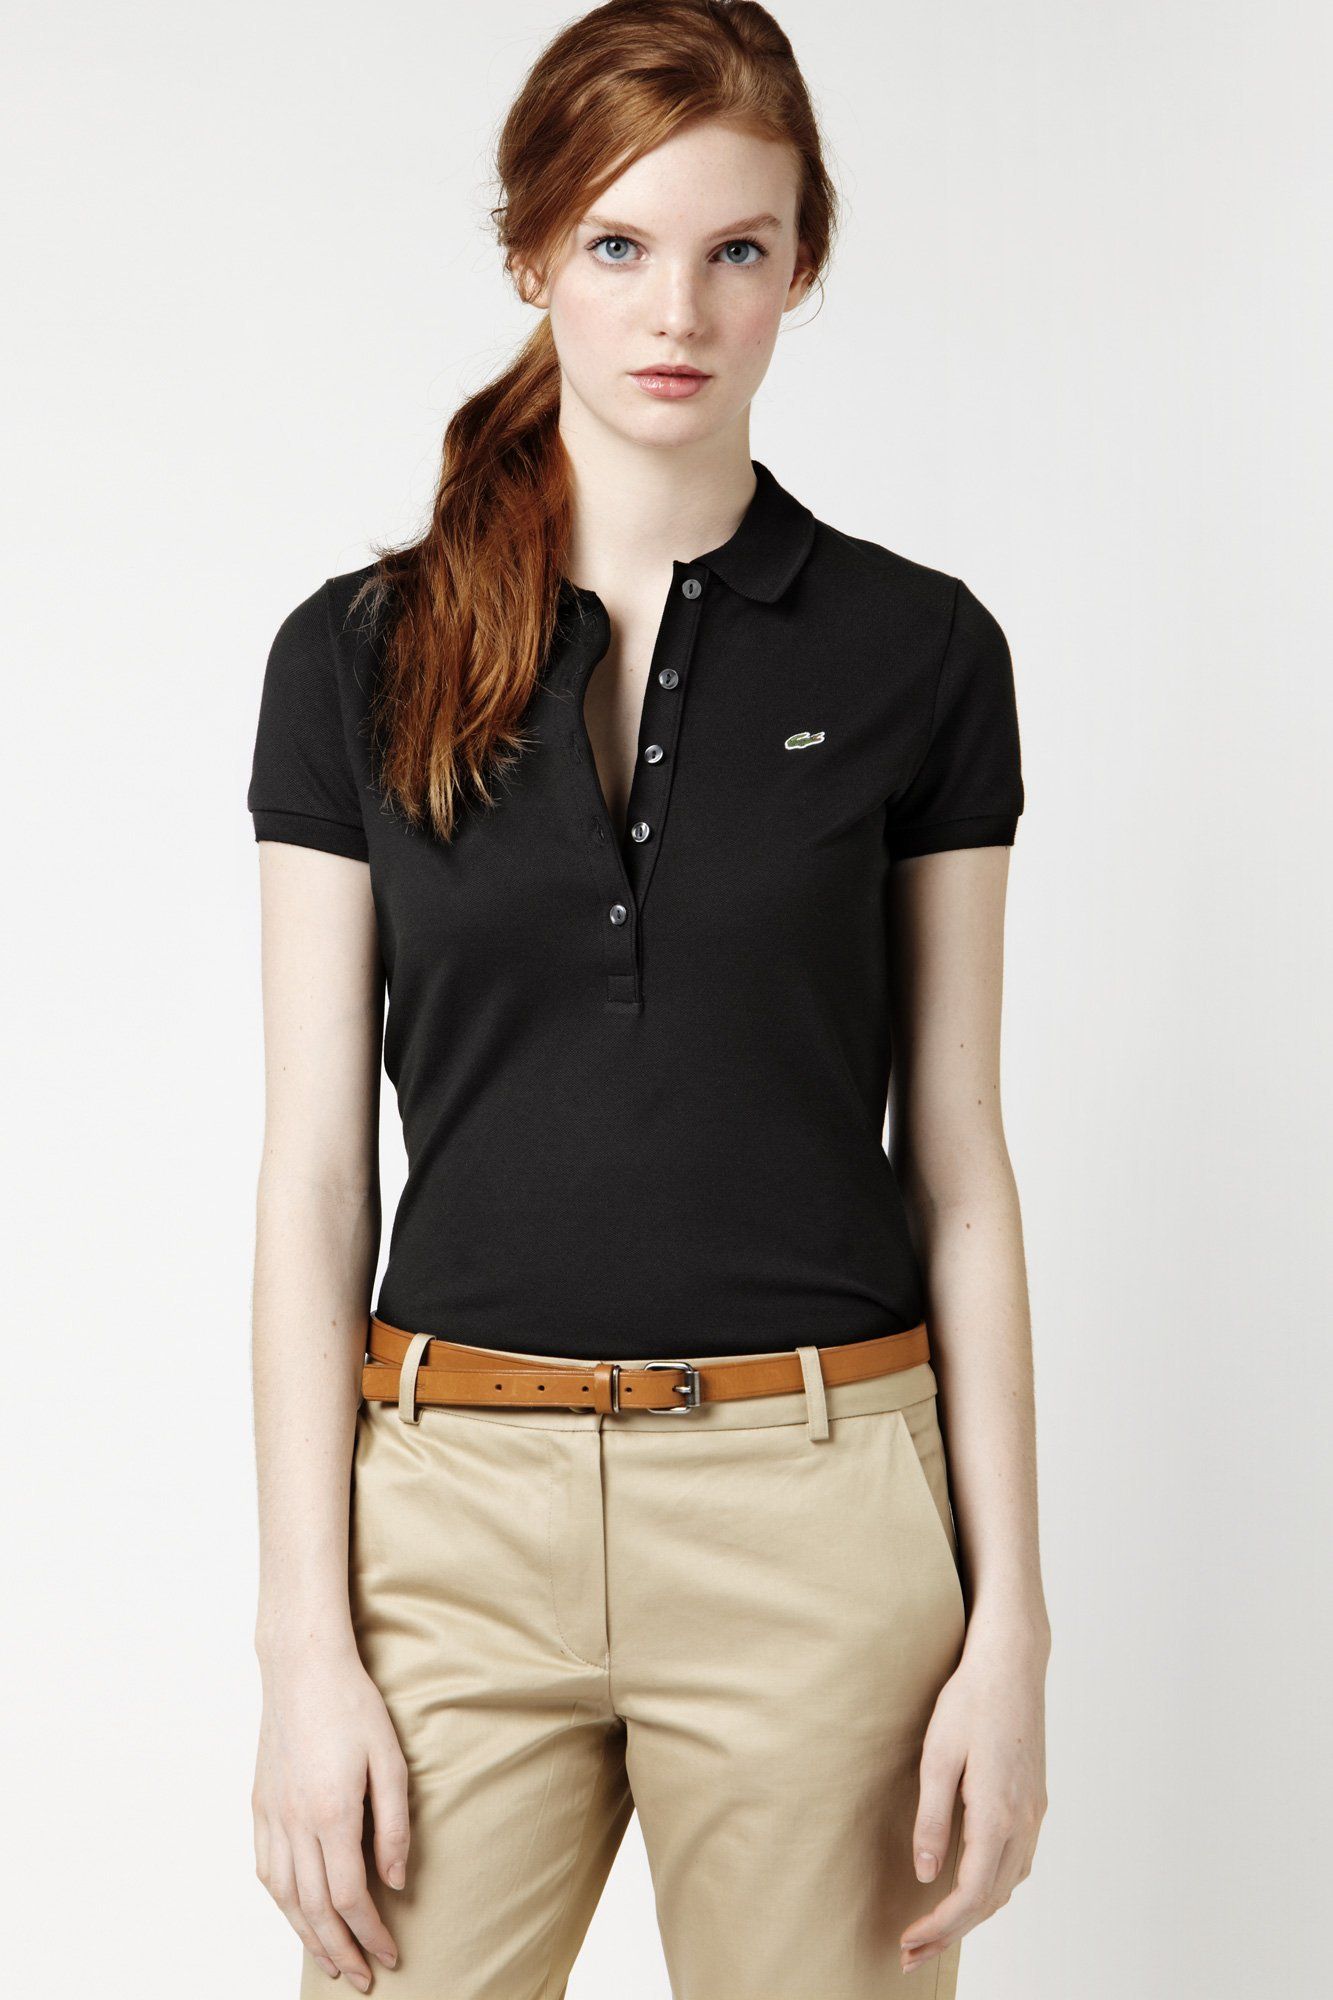 Lacoste Women's Slim Fit Stretch Mini Cotton Piqué Polo PF7845-031 Mann Sports